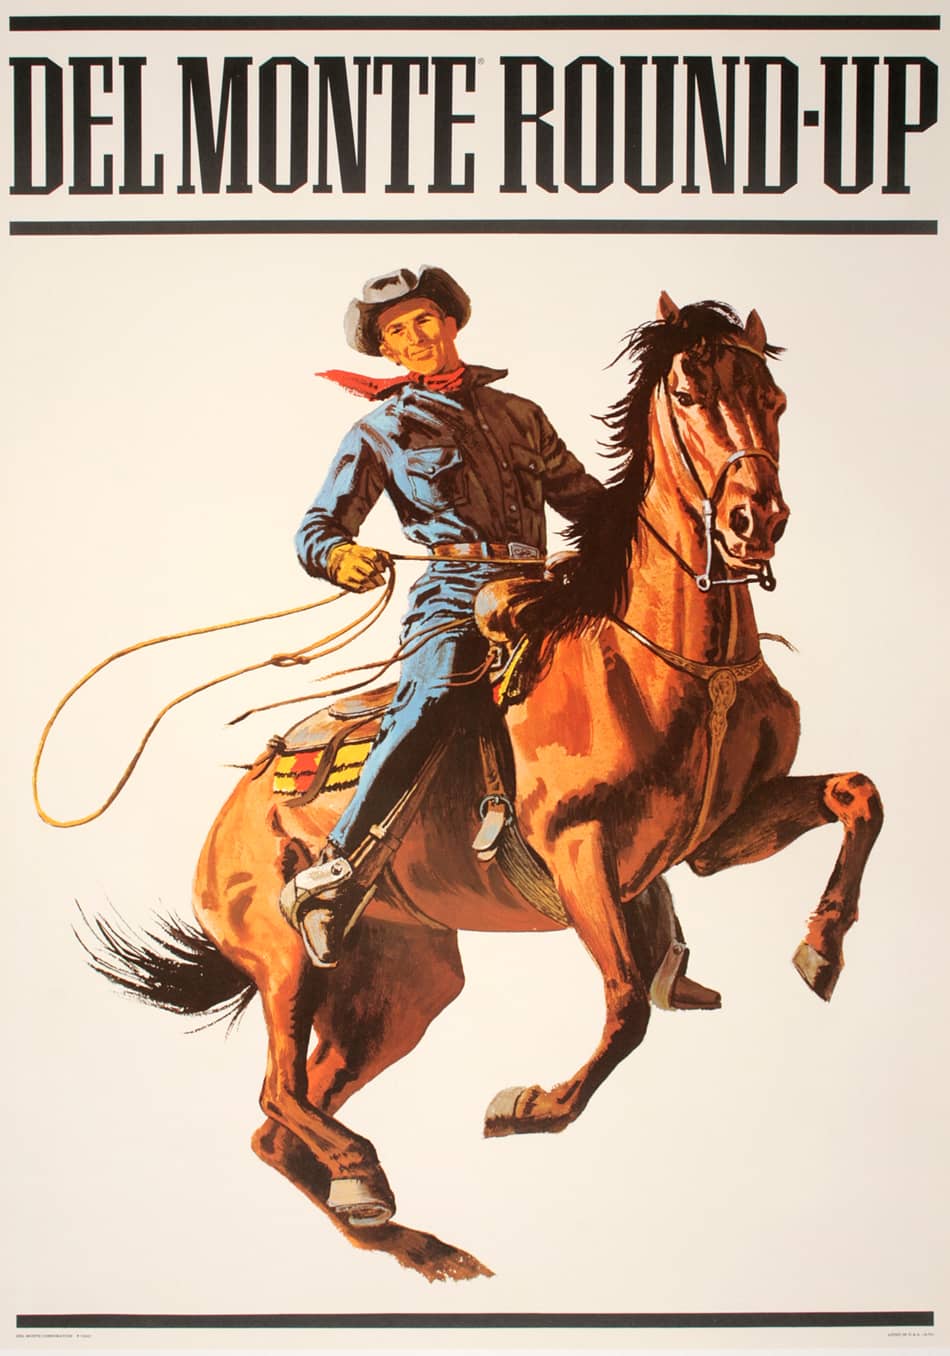 Del Monte Roundup Original Vintage Poster c1965 Cowboy in Blue Shirt on Horse